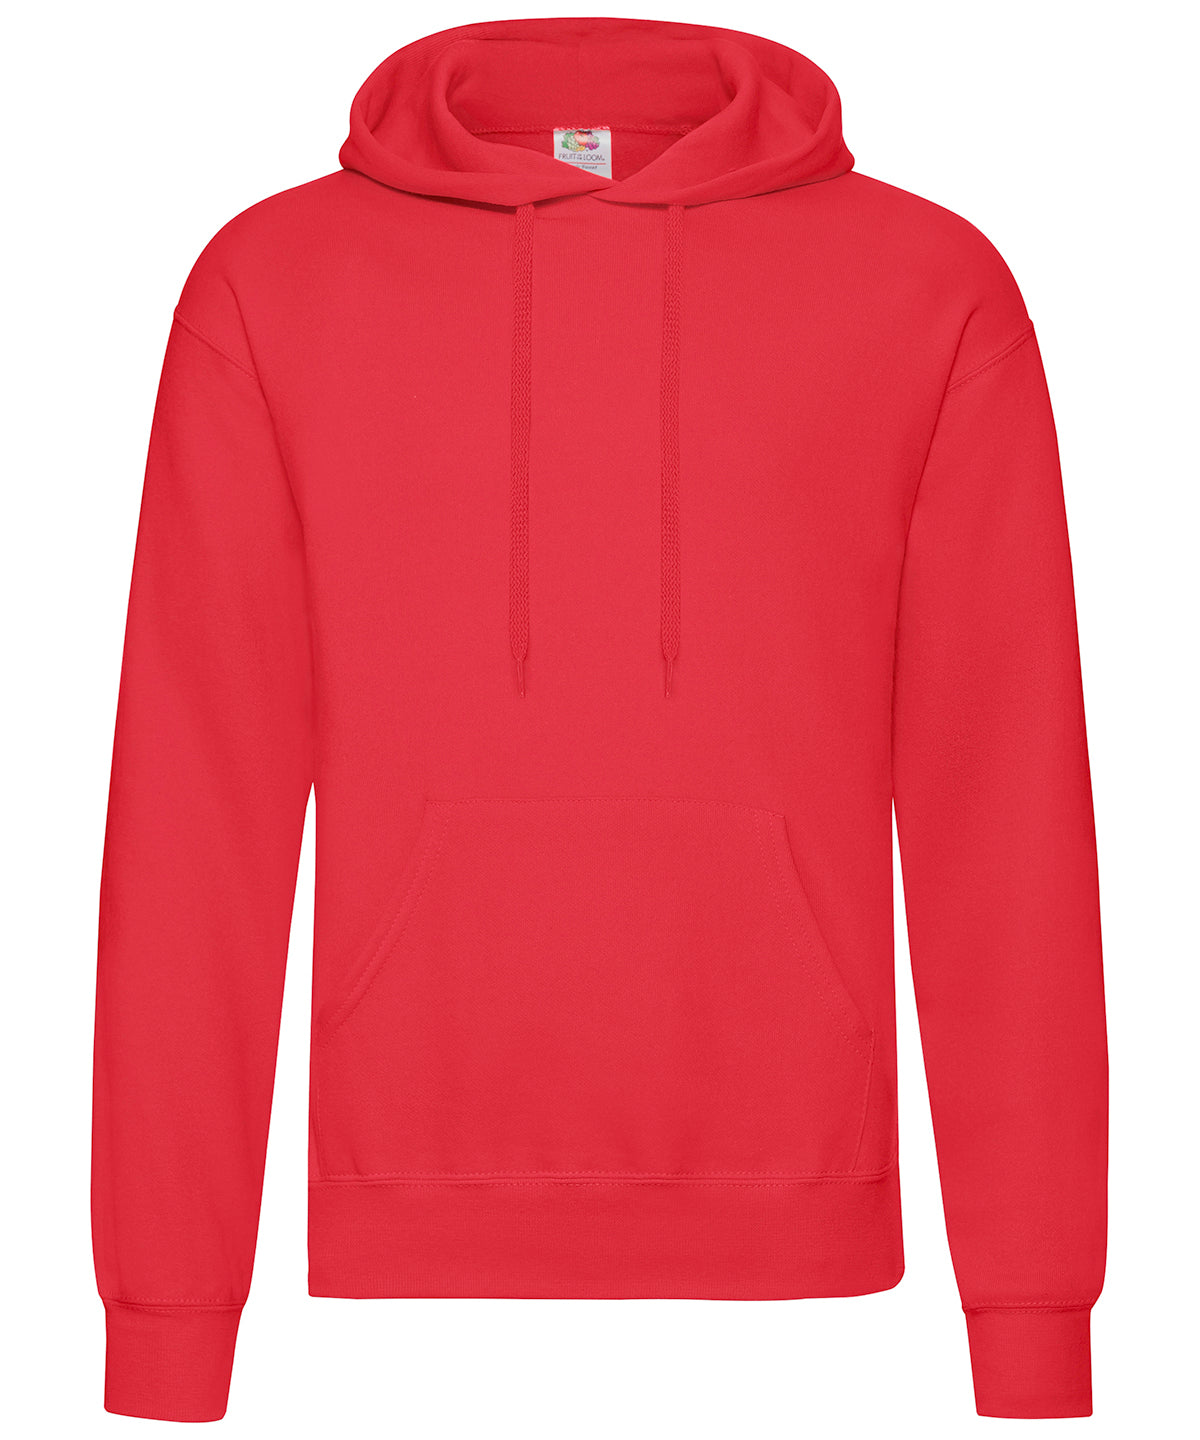 Classic 80/20 hooded sweatshirt | Red